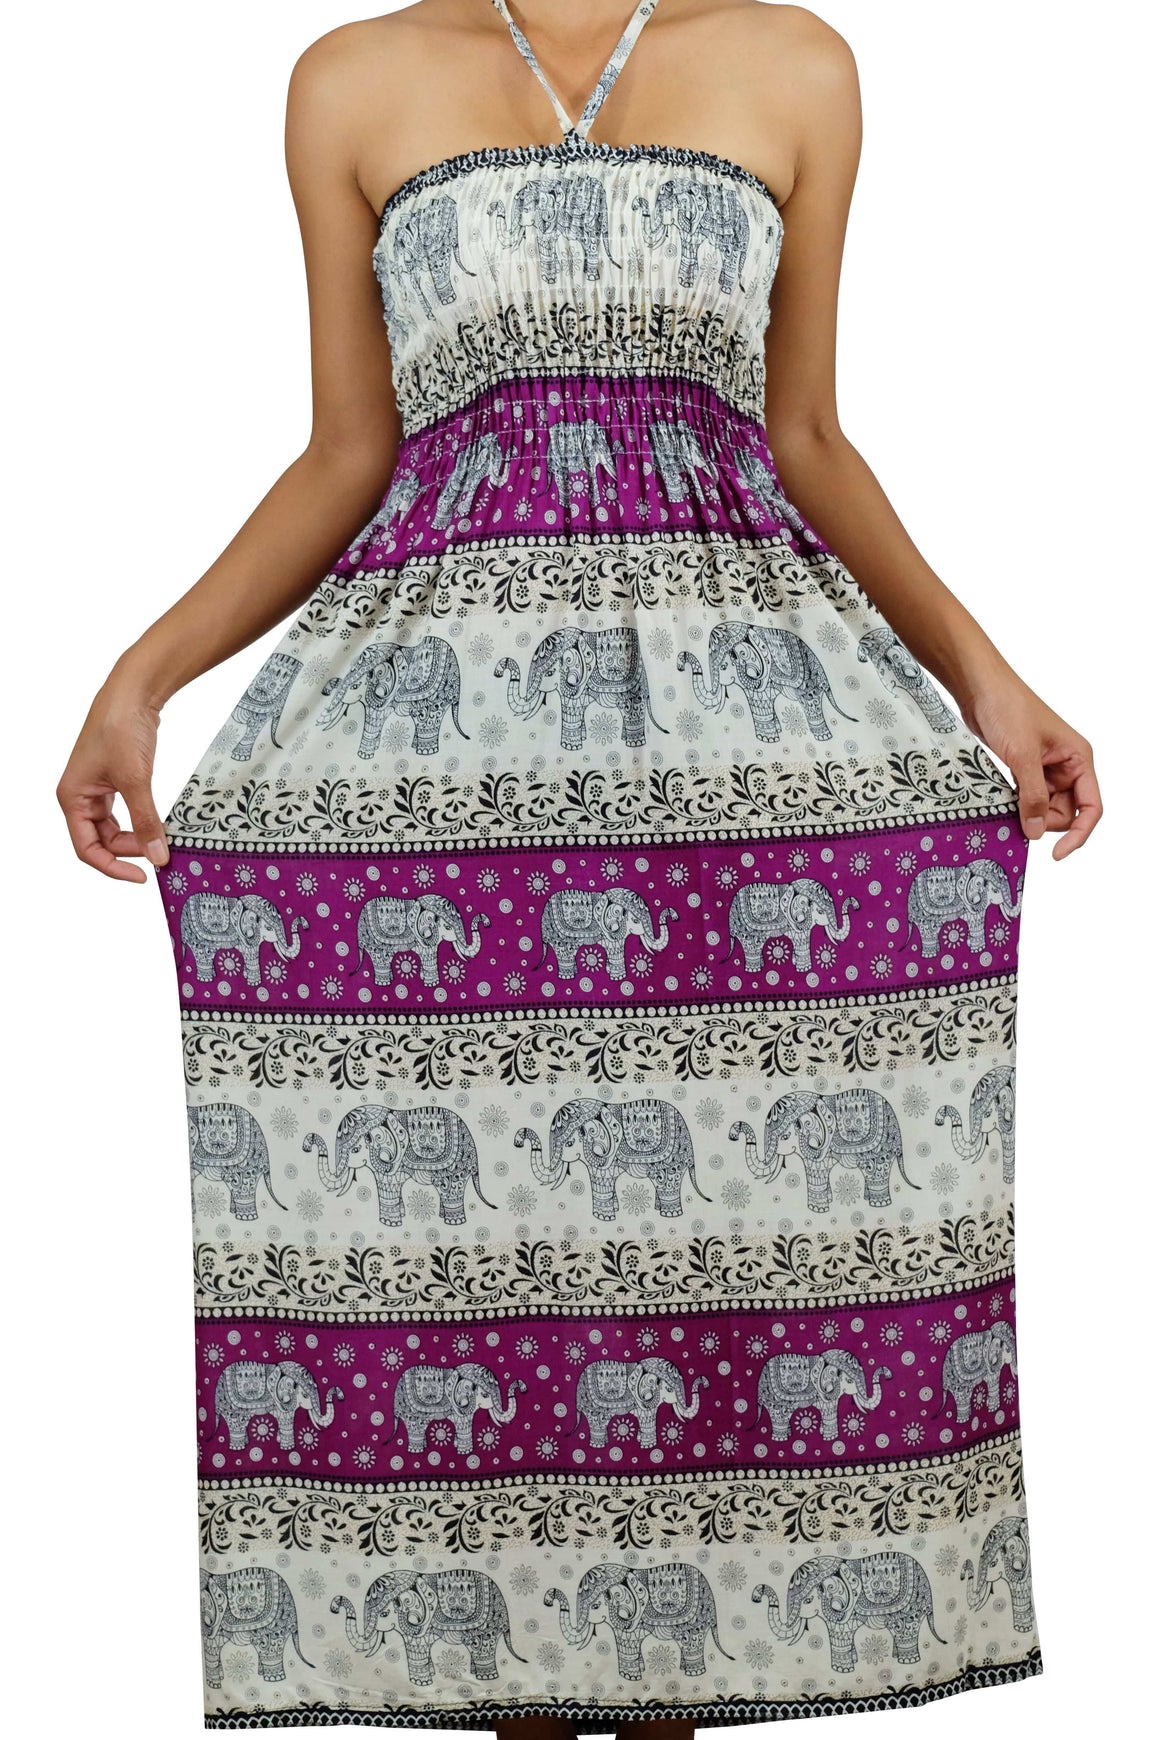 Elephant Shirt Store Dress Chang Phun Halter Elephant Dress White and Purple